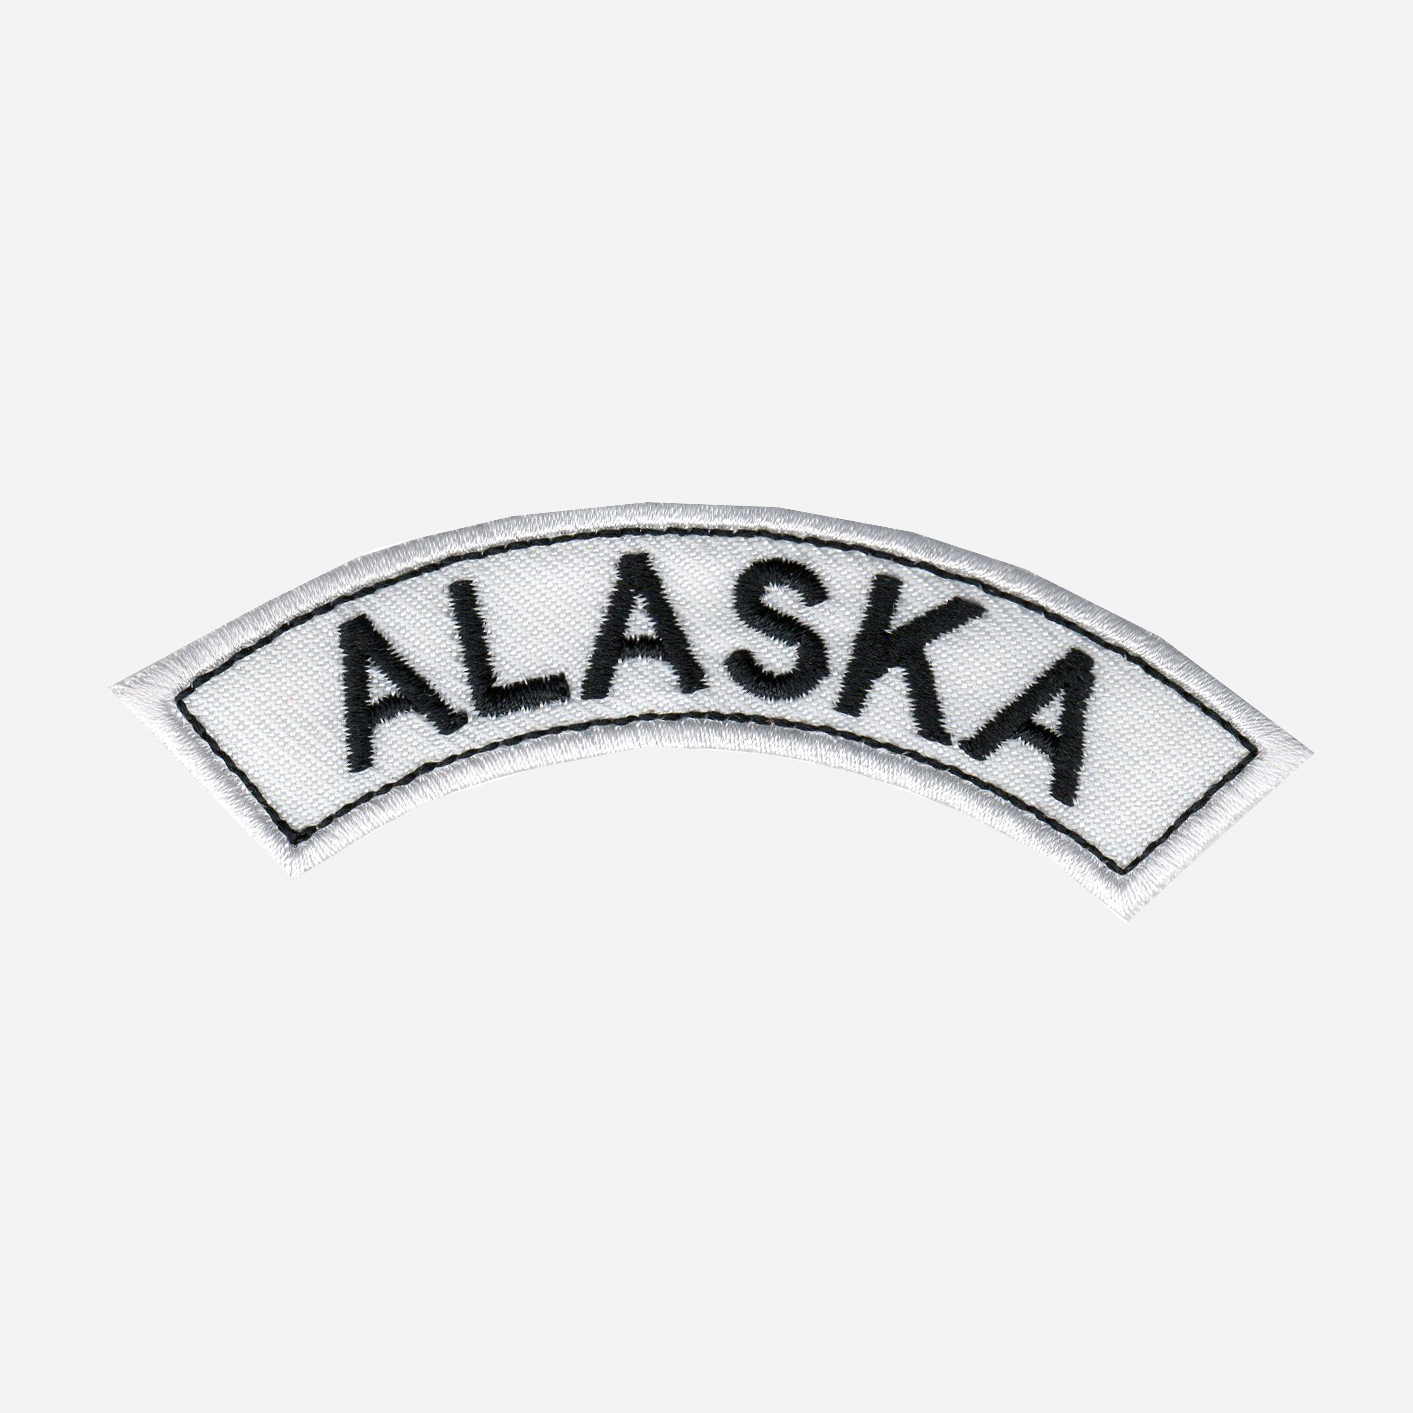 Alaska Mini Top Rocker Embroidered Vest Patch